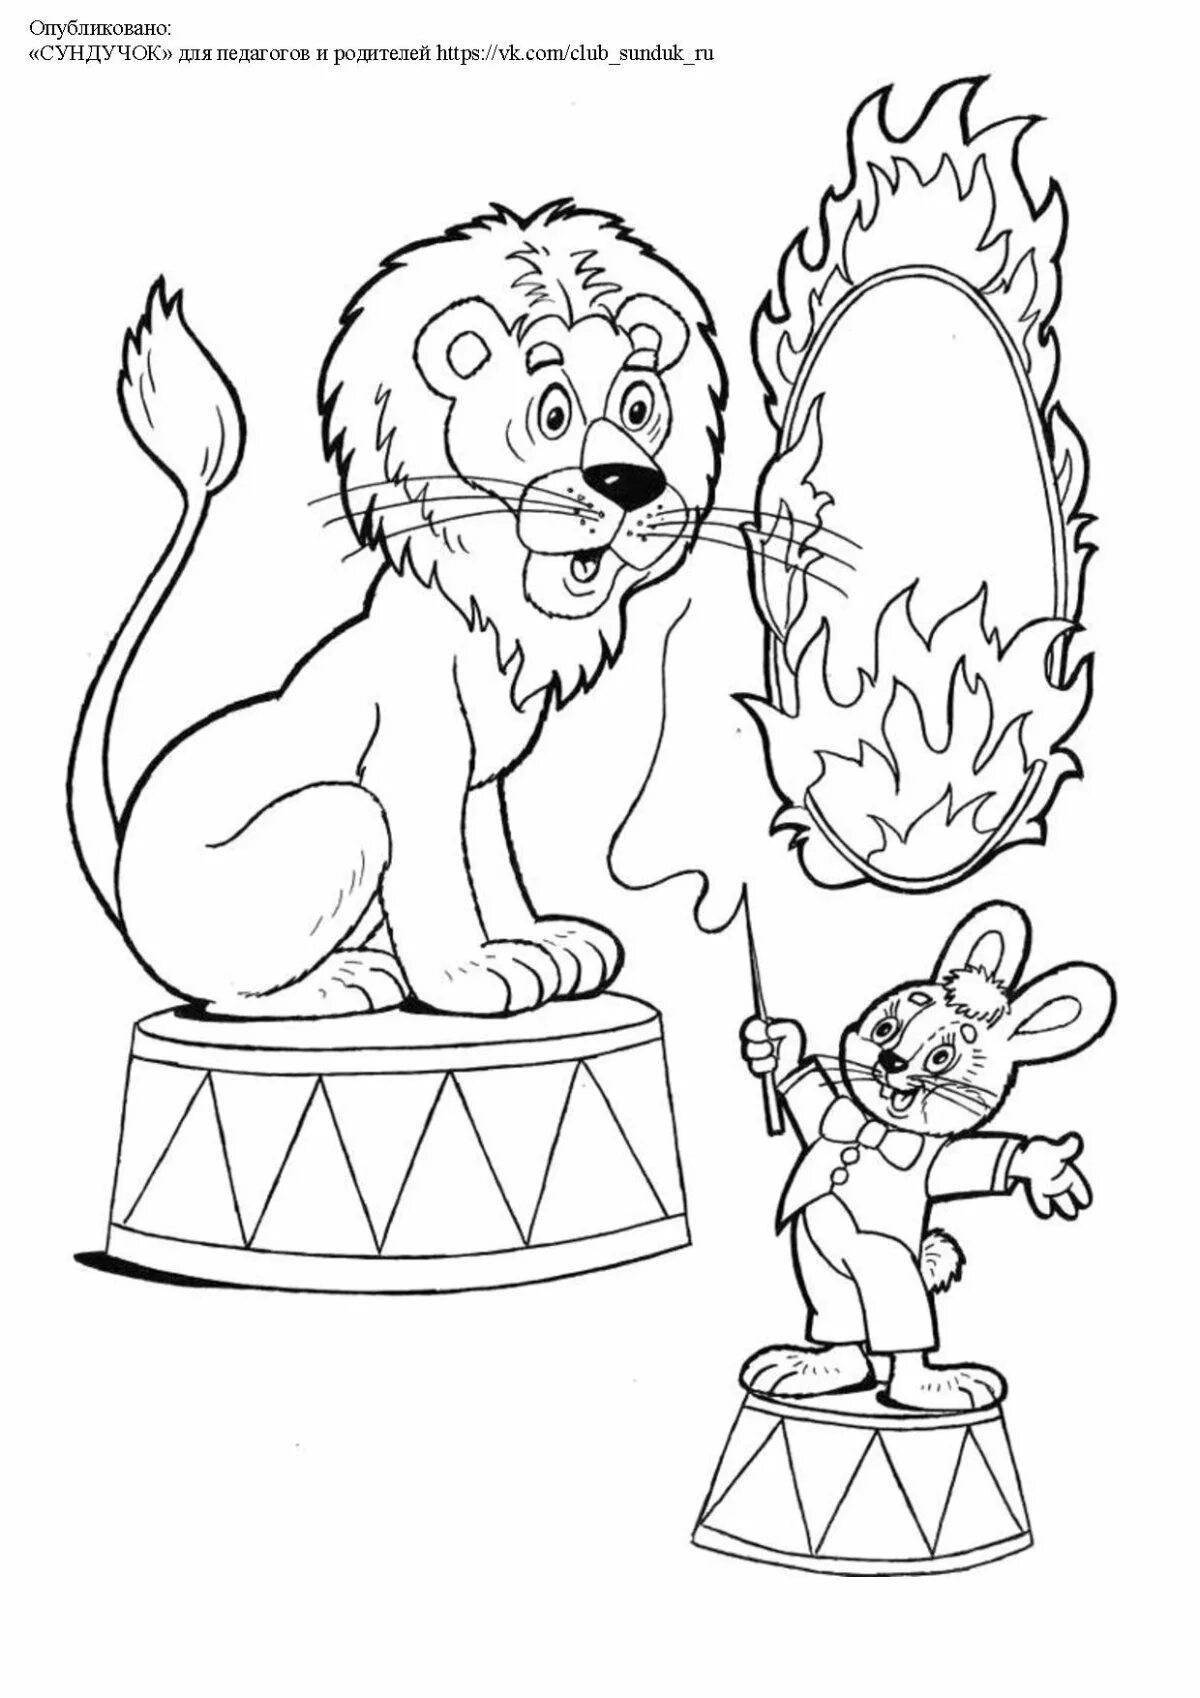 Fun circus coloring book for kids